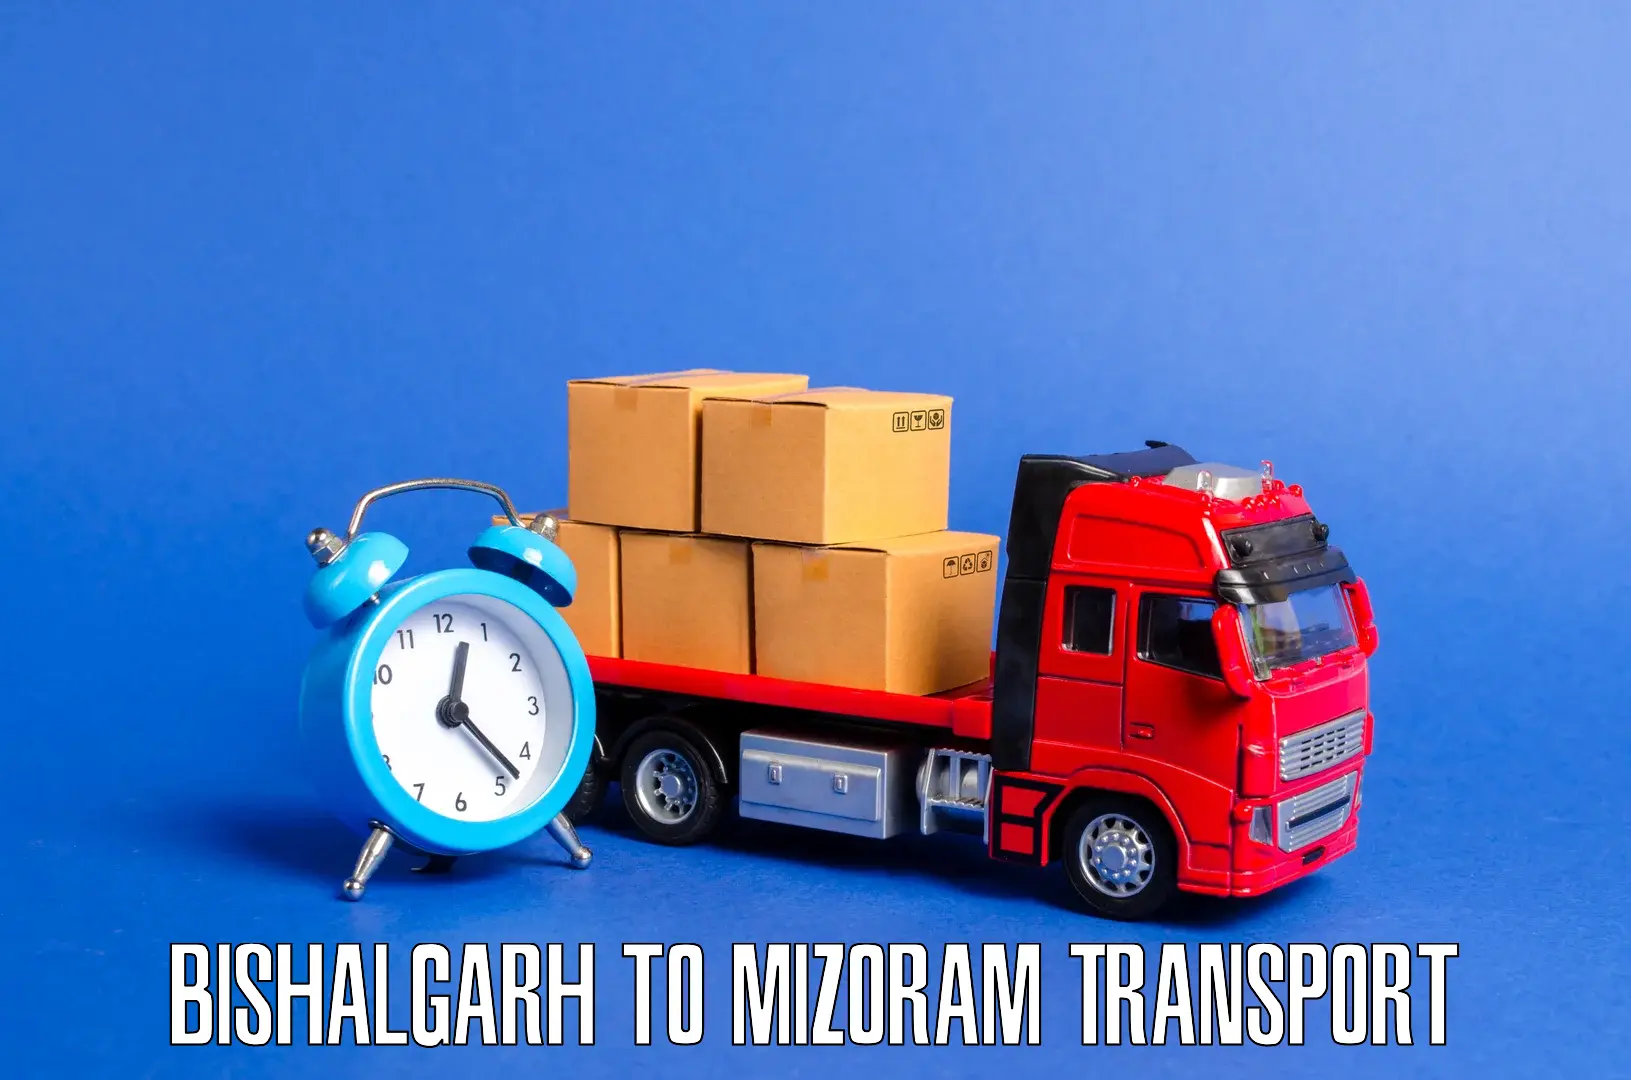 Bike shipping service in Bishalgarh to Mizoram